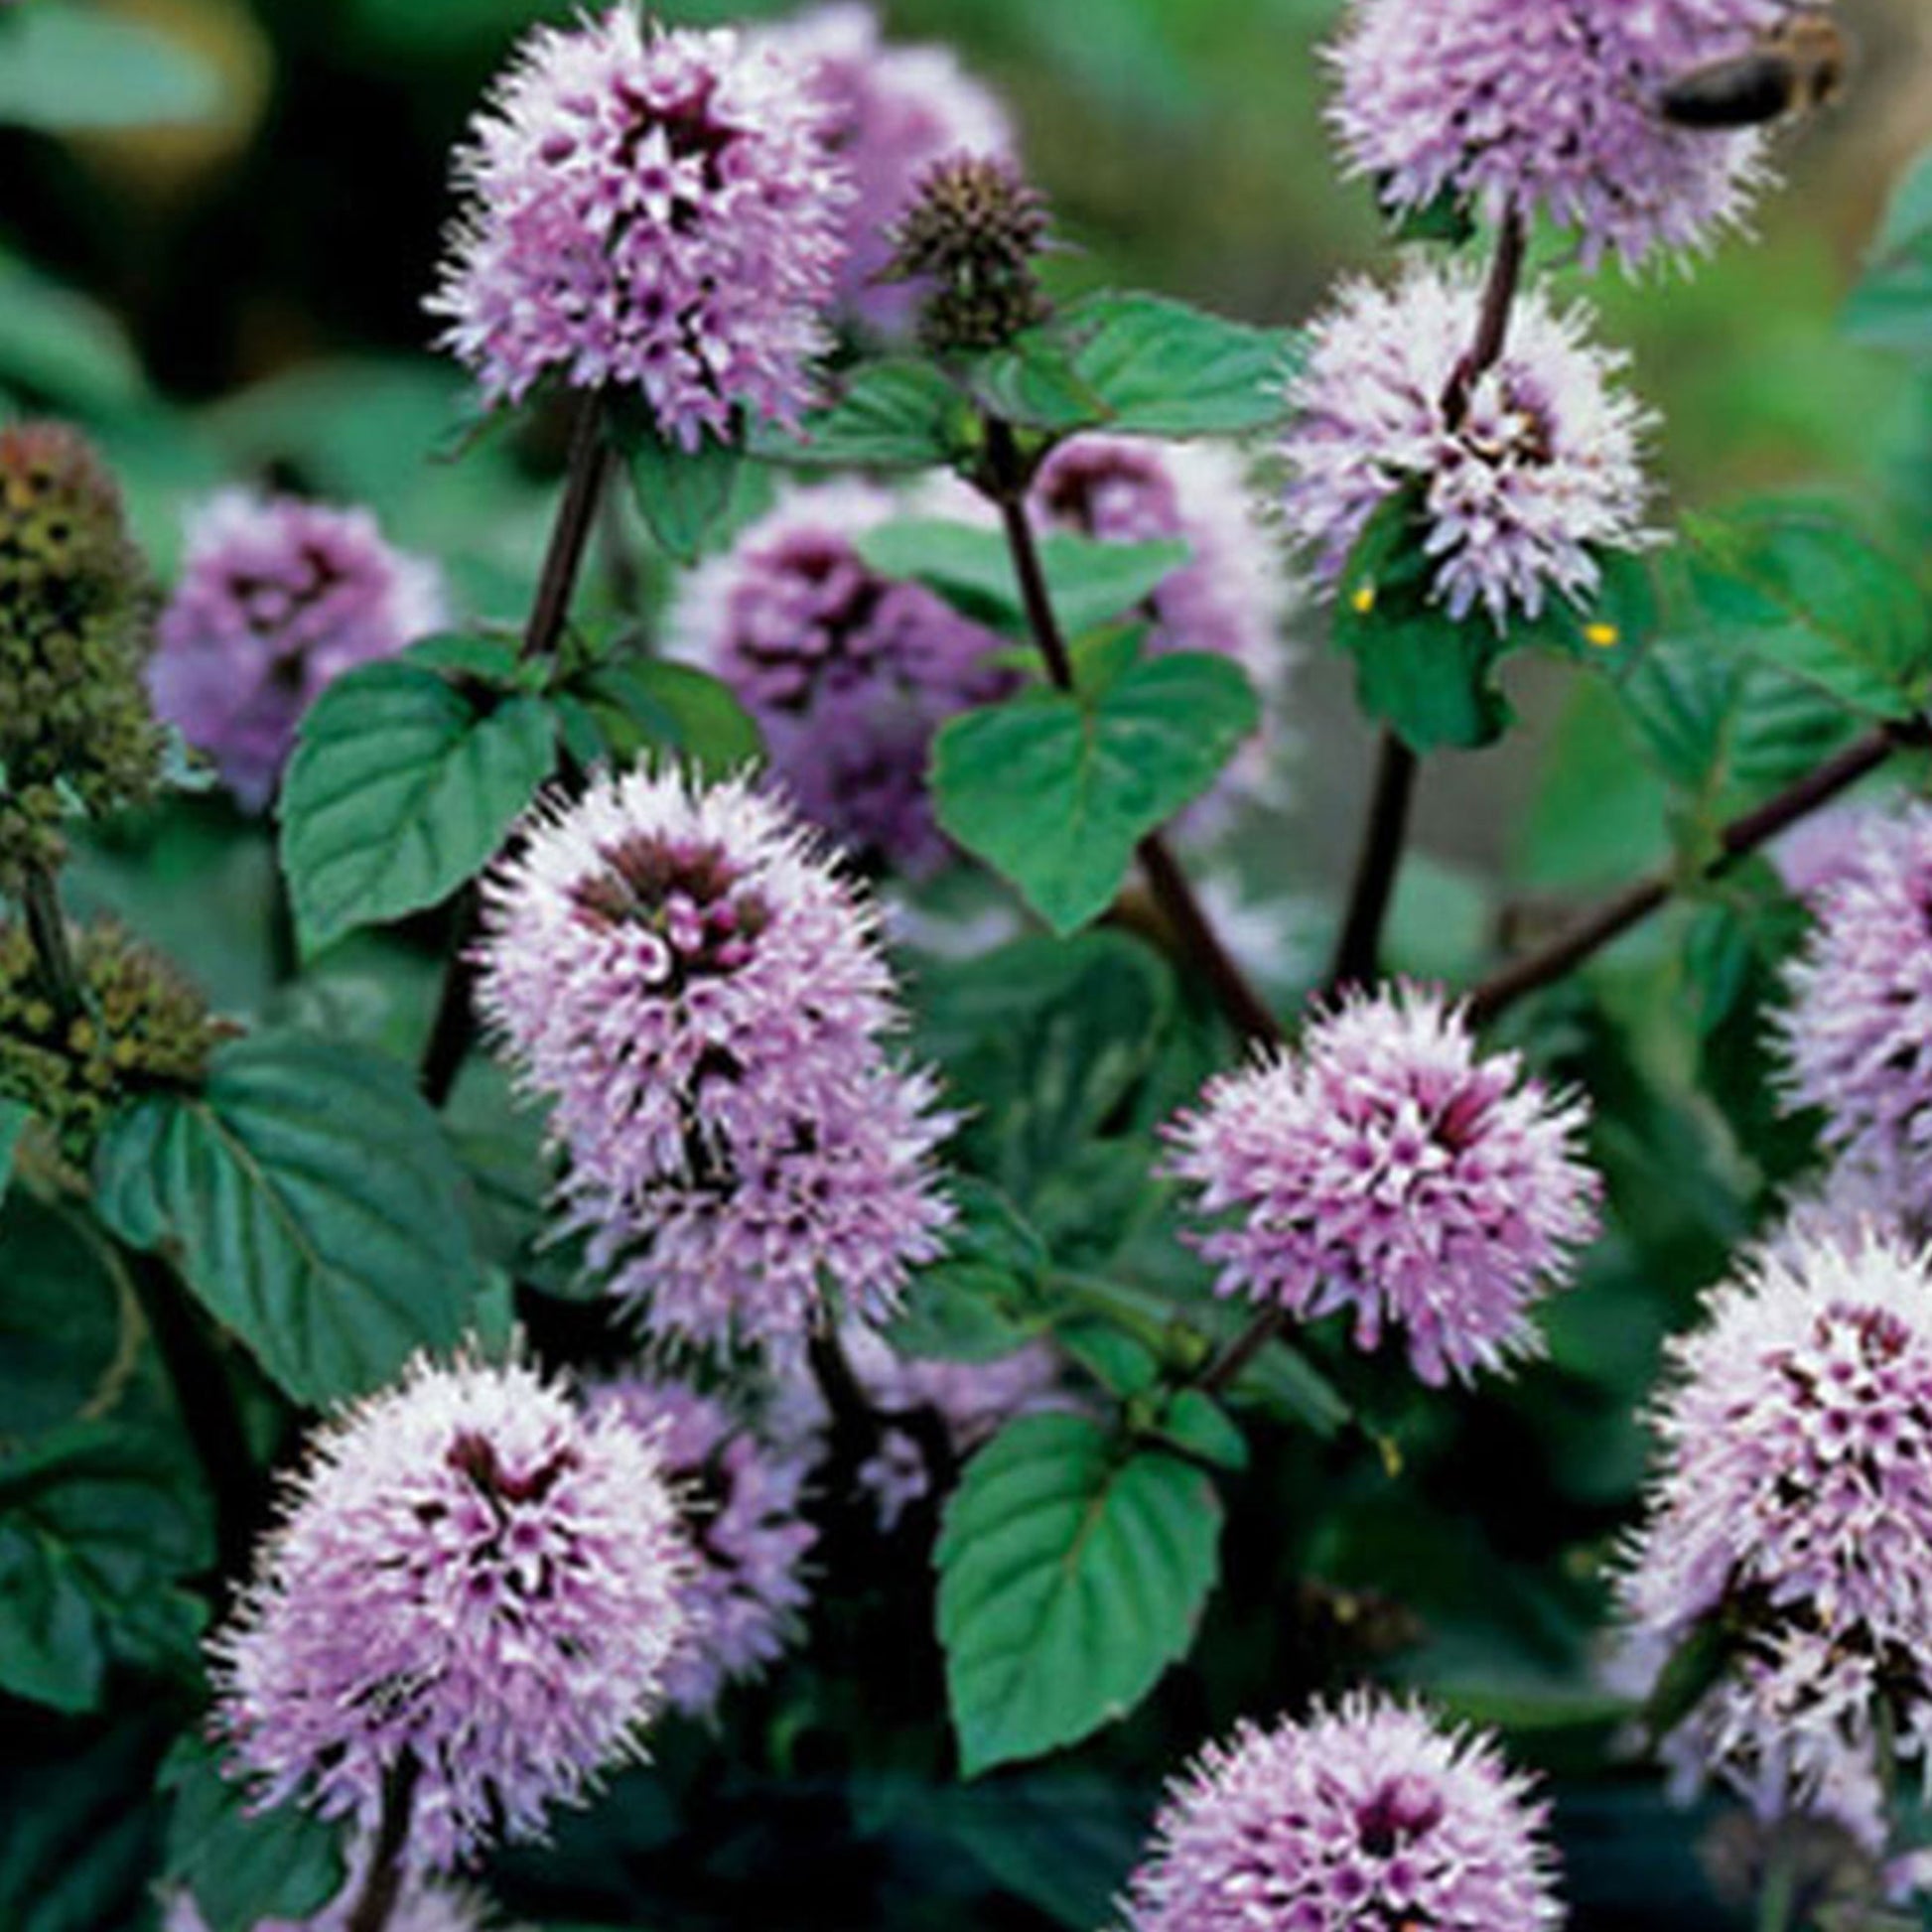 Achetez maintenant une plante aquatique Menthe Mentha aquatica violet -  Plante de berge | Bakker.com